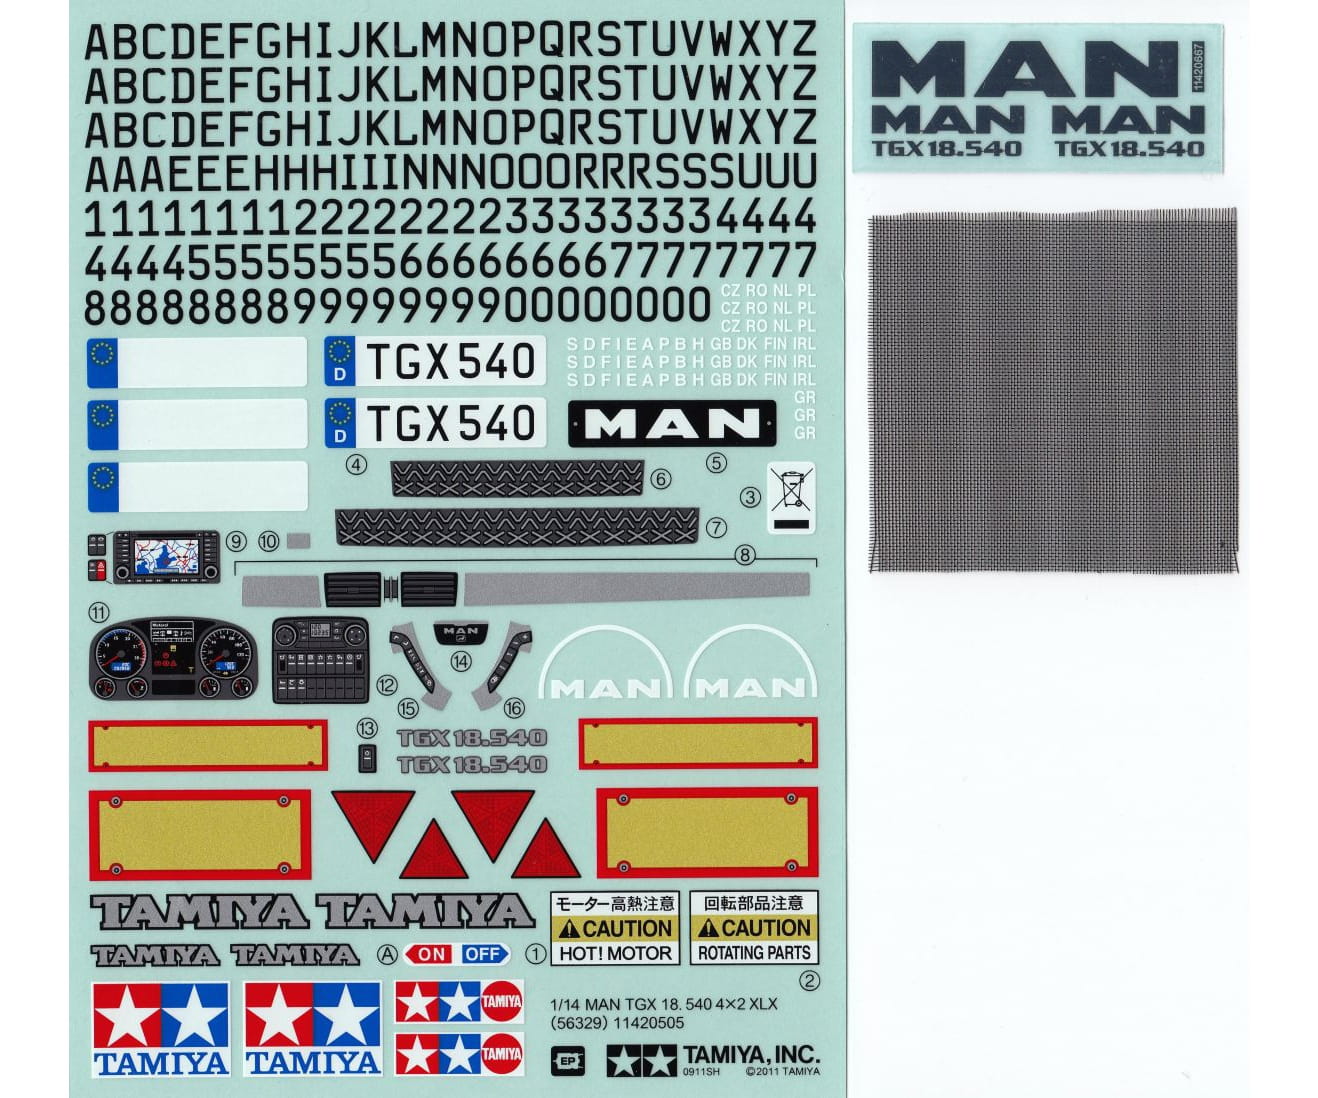 Tamiya Sticker MAN TGX 18.540 Ver.II